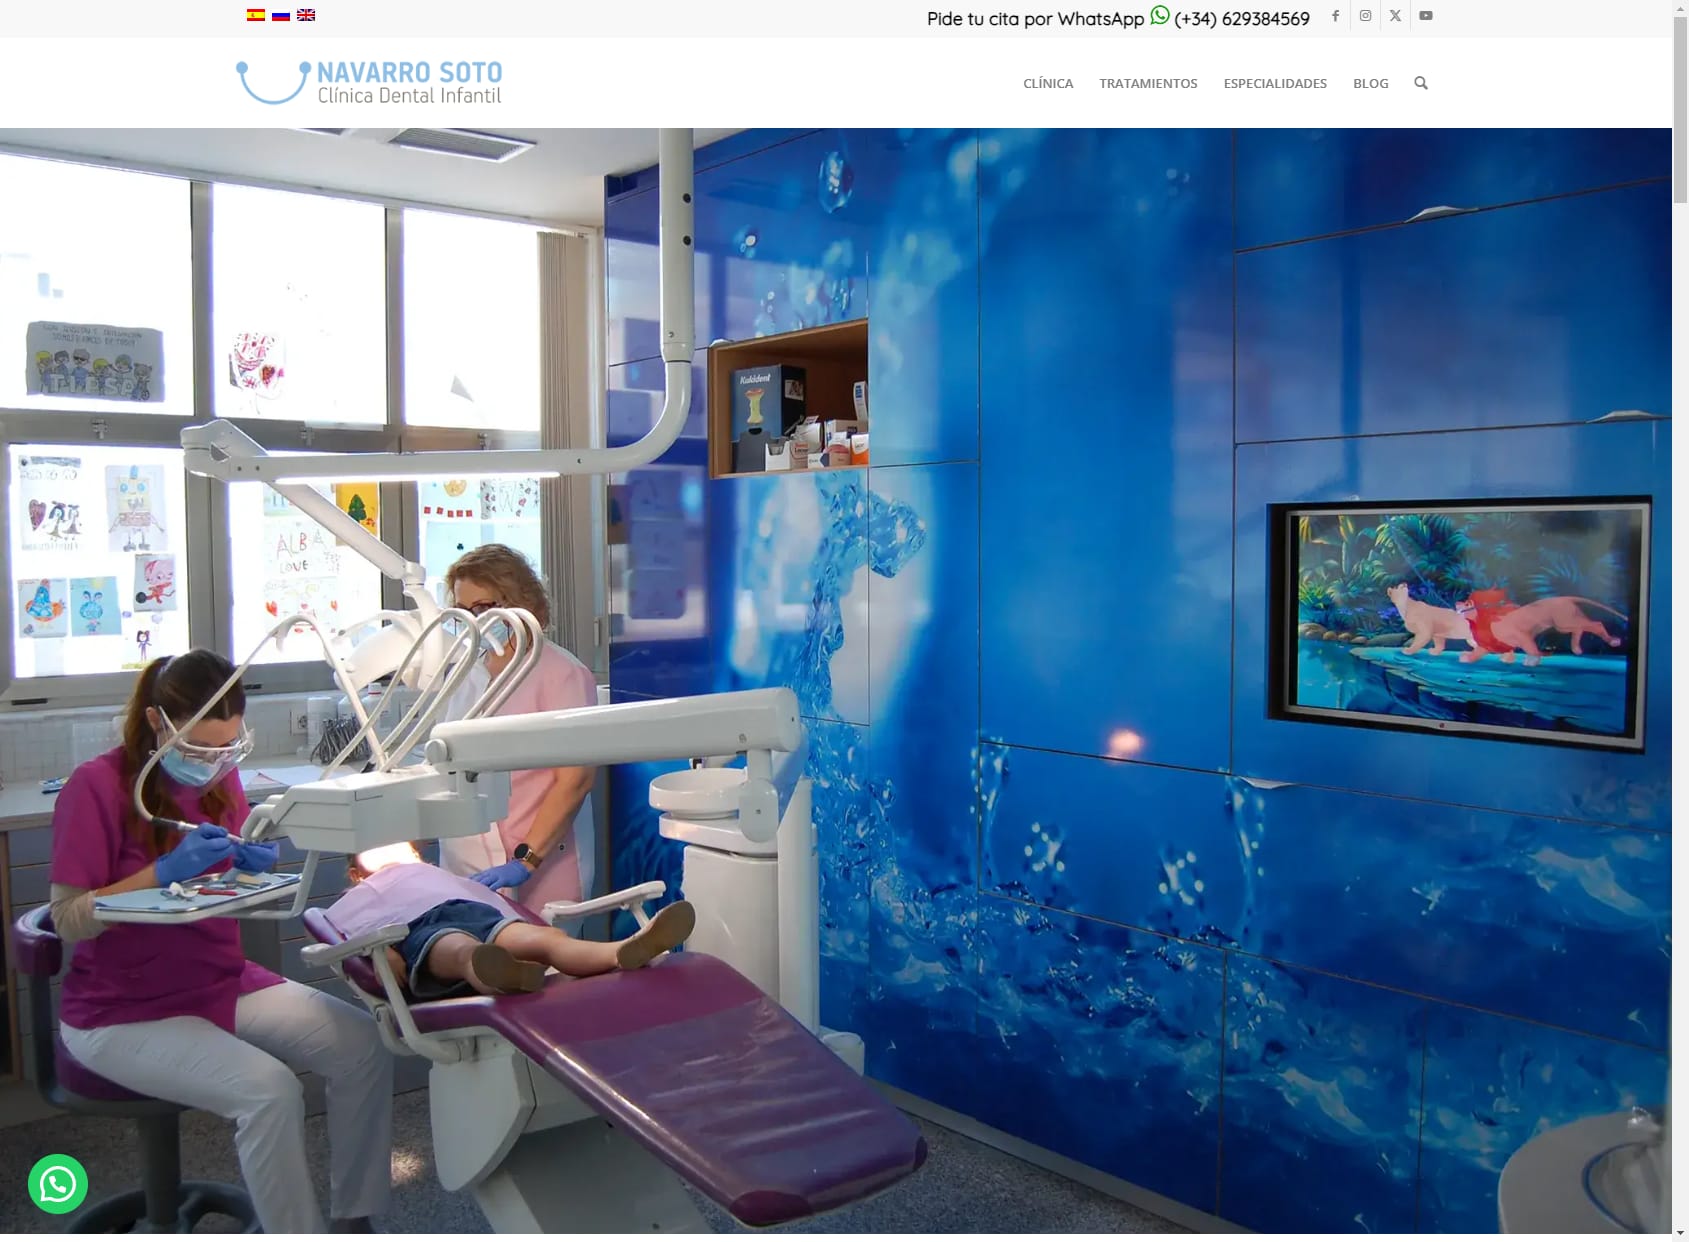 Children's Dental Clinic in Murcia - Navarro Soto